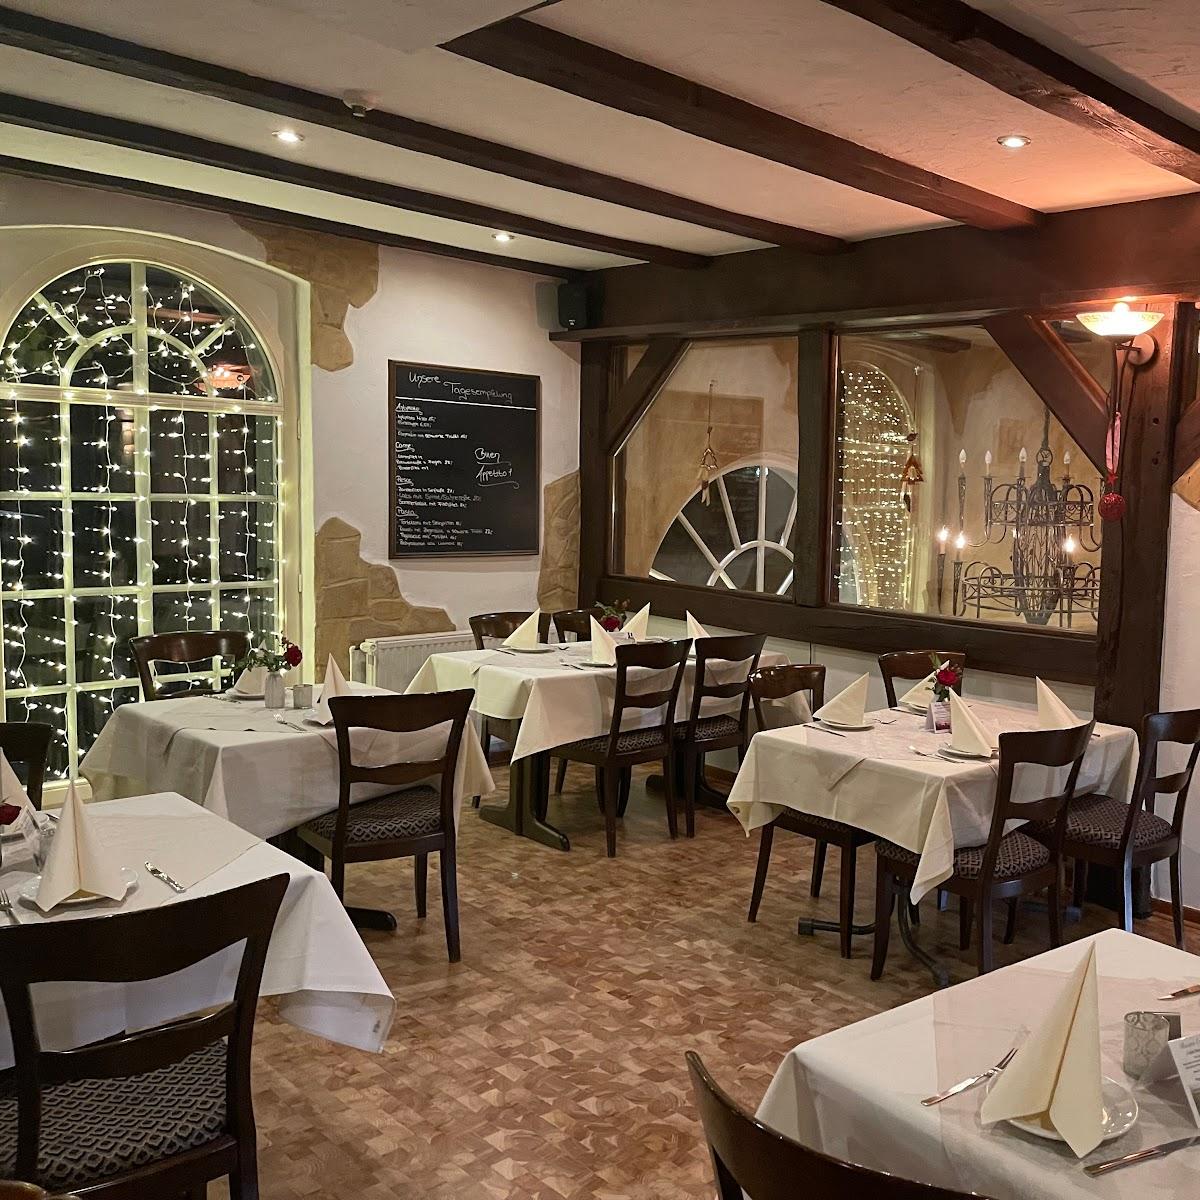 Restaurant "Trattoria da Vinci" in Warendorf